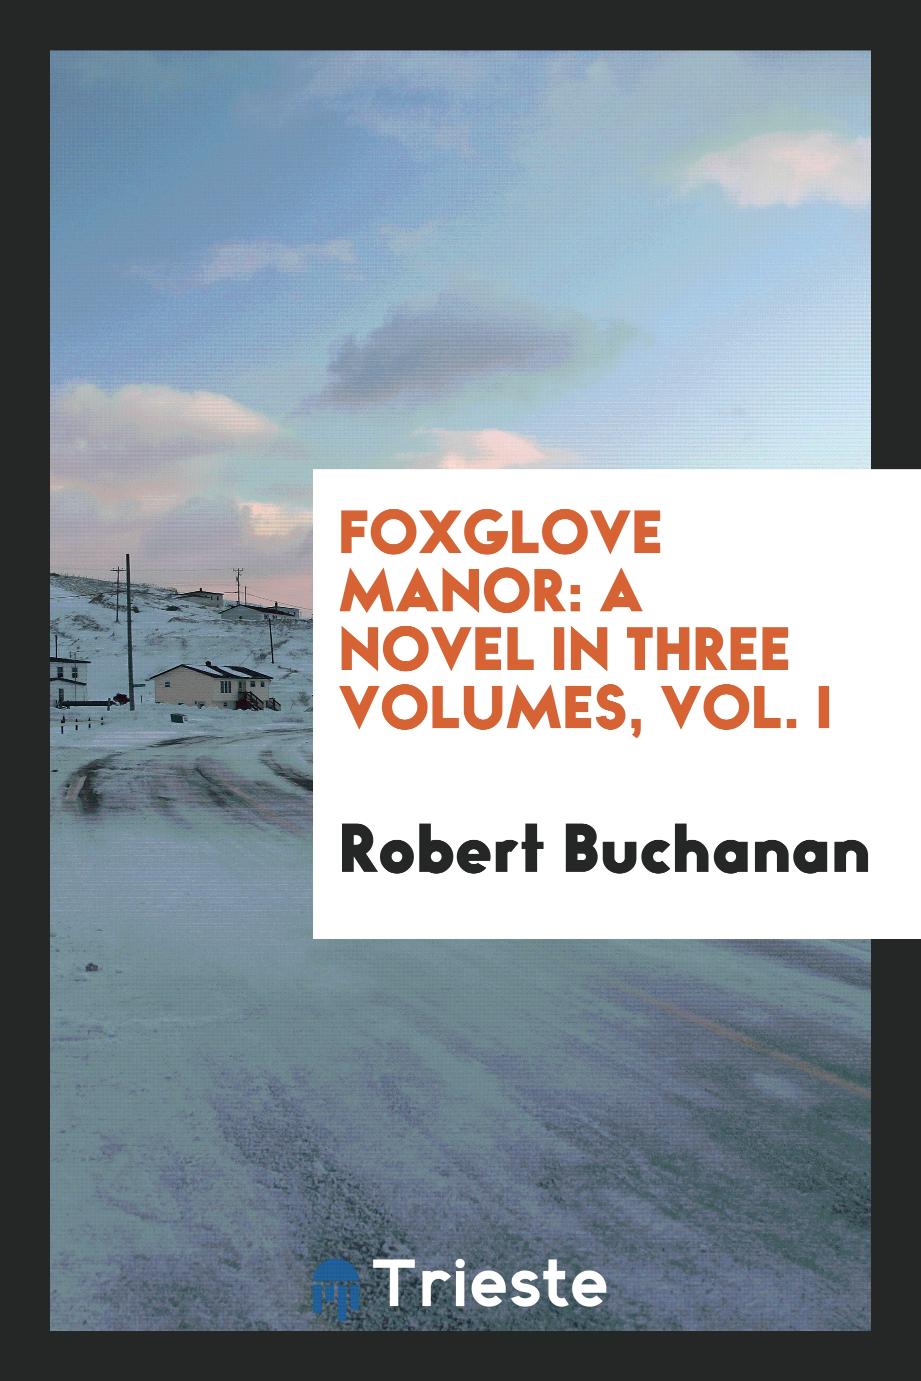 Foxglove Manor: a novel in three volumes, Vol. I